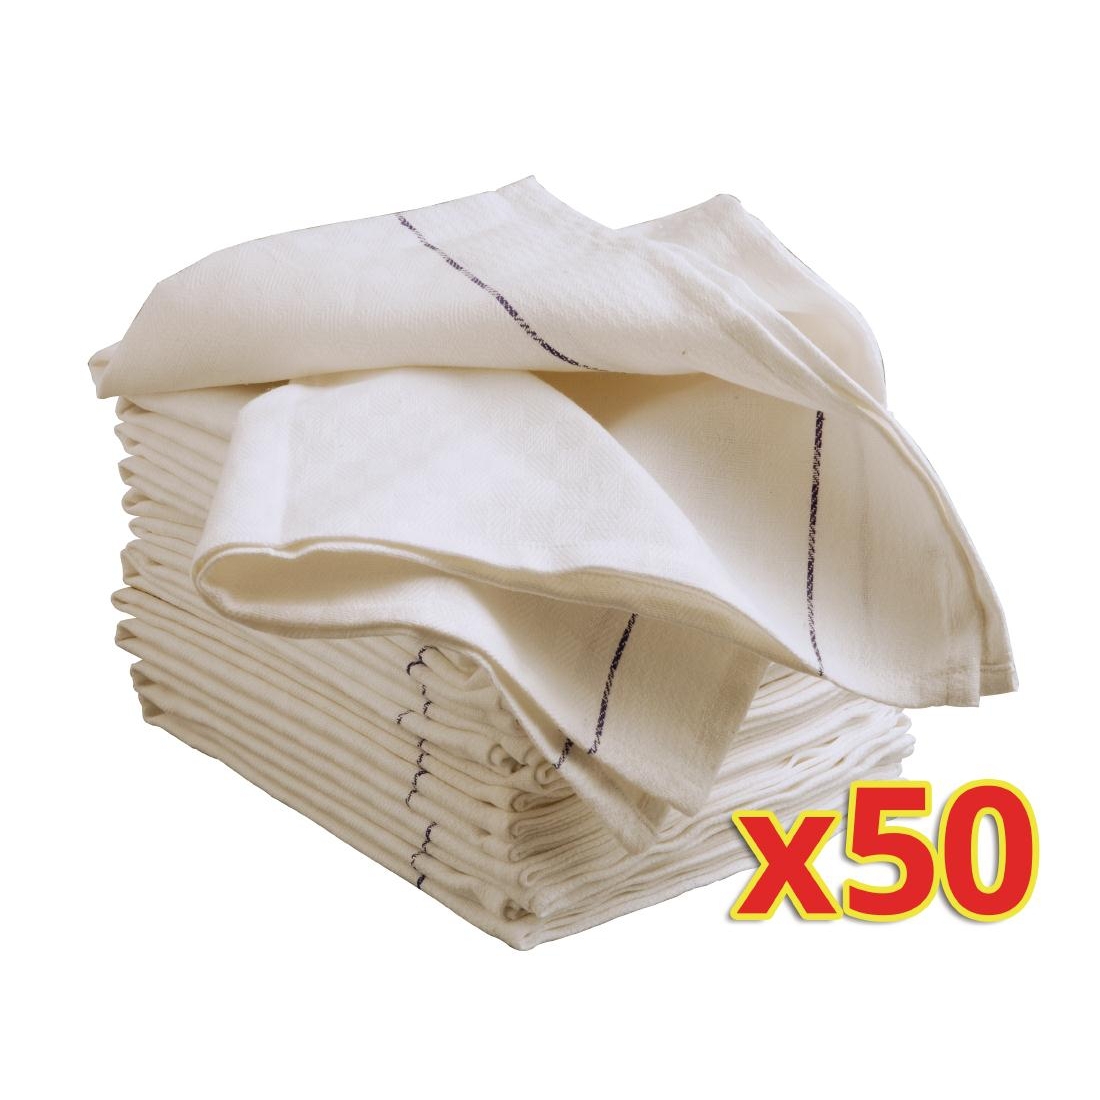 Bulk Buy Pack of 50 Cotton Waiting Cloths